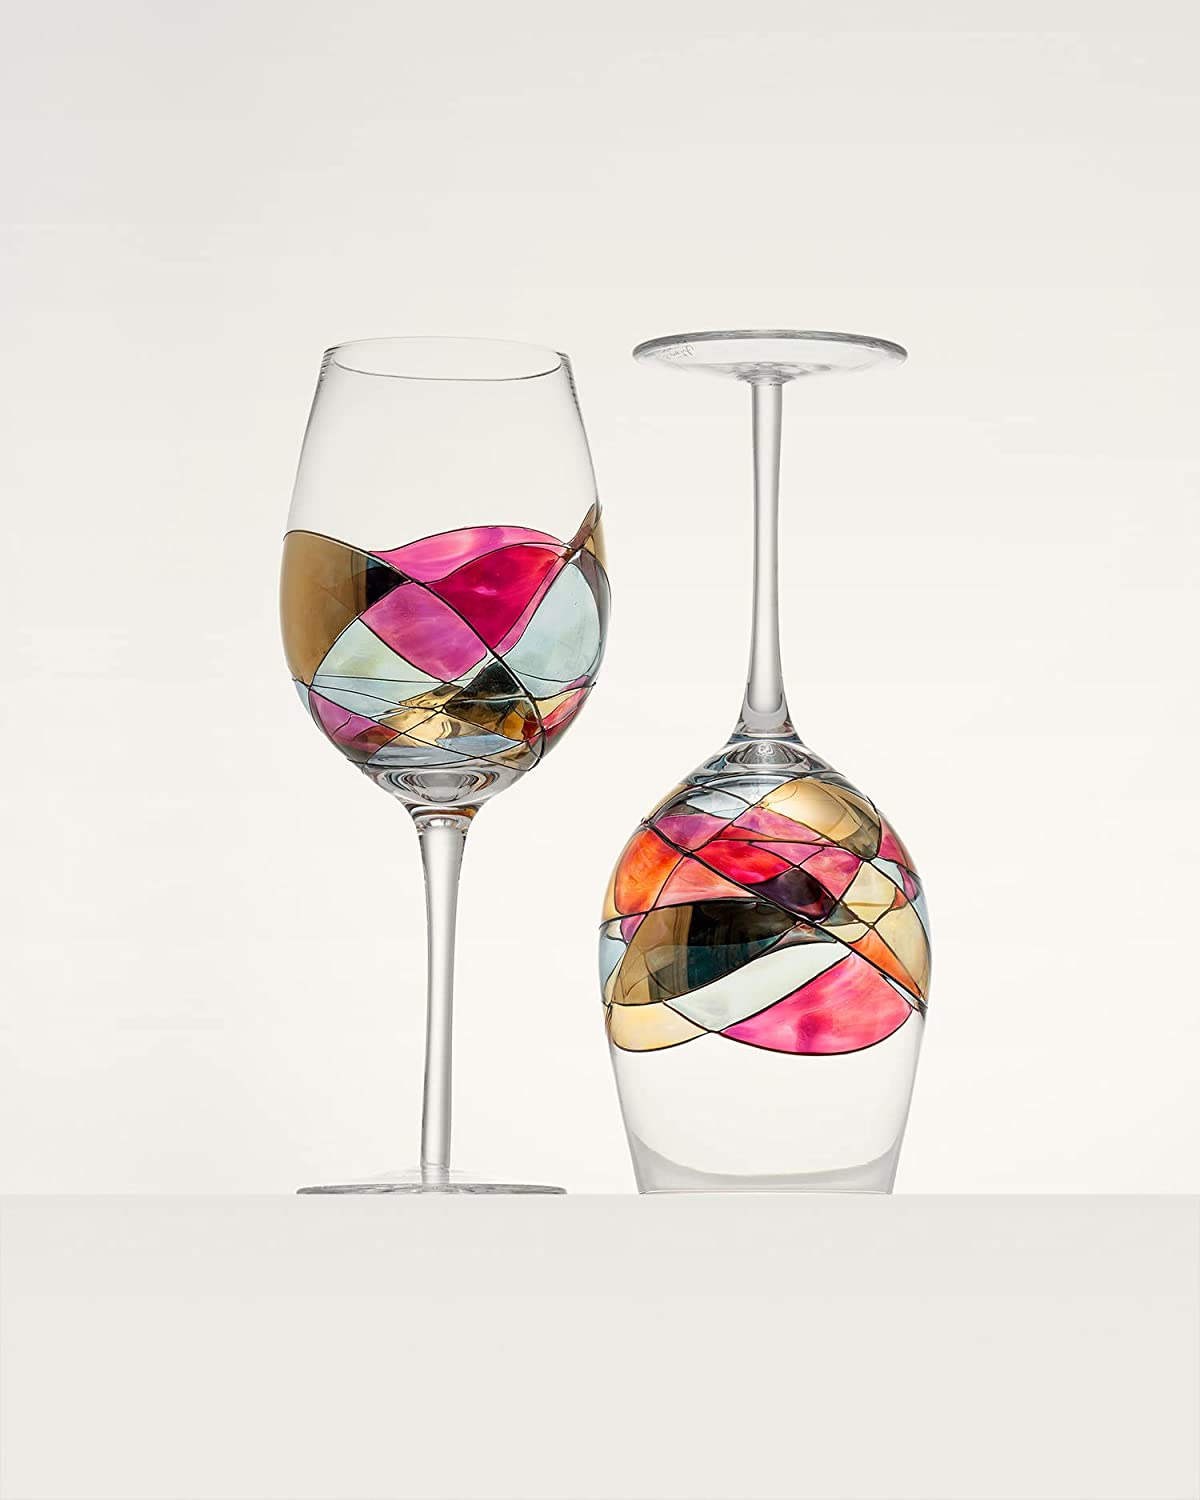 Hand painted Antoni Barcelona wine glasses